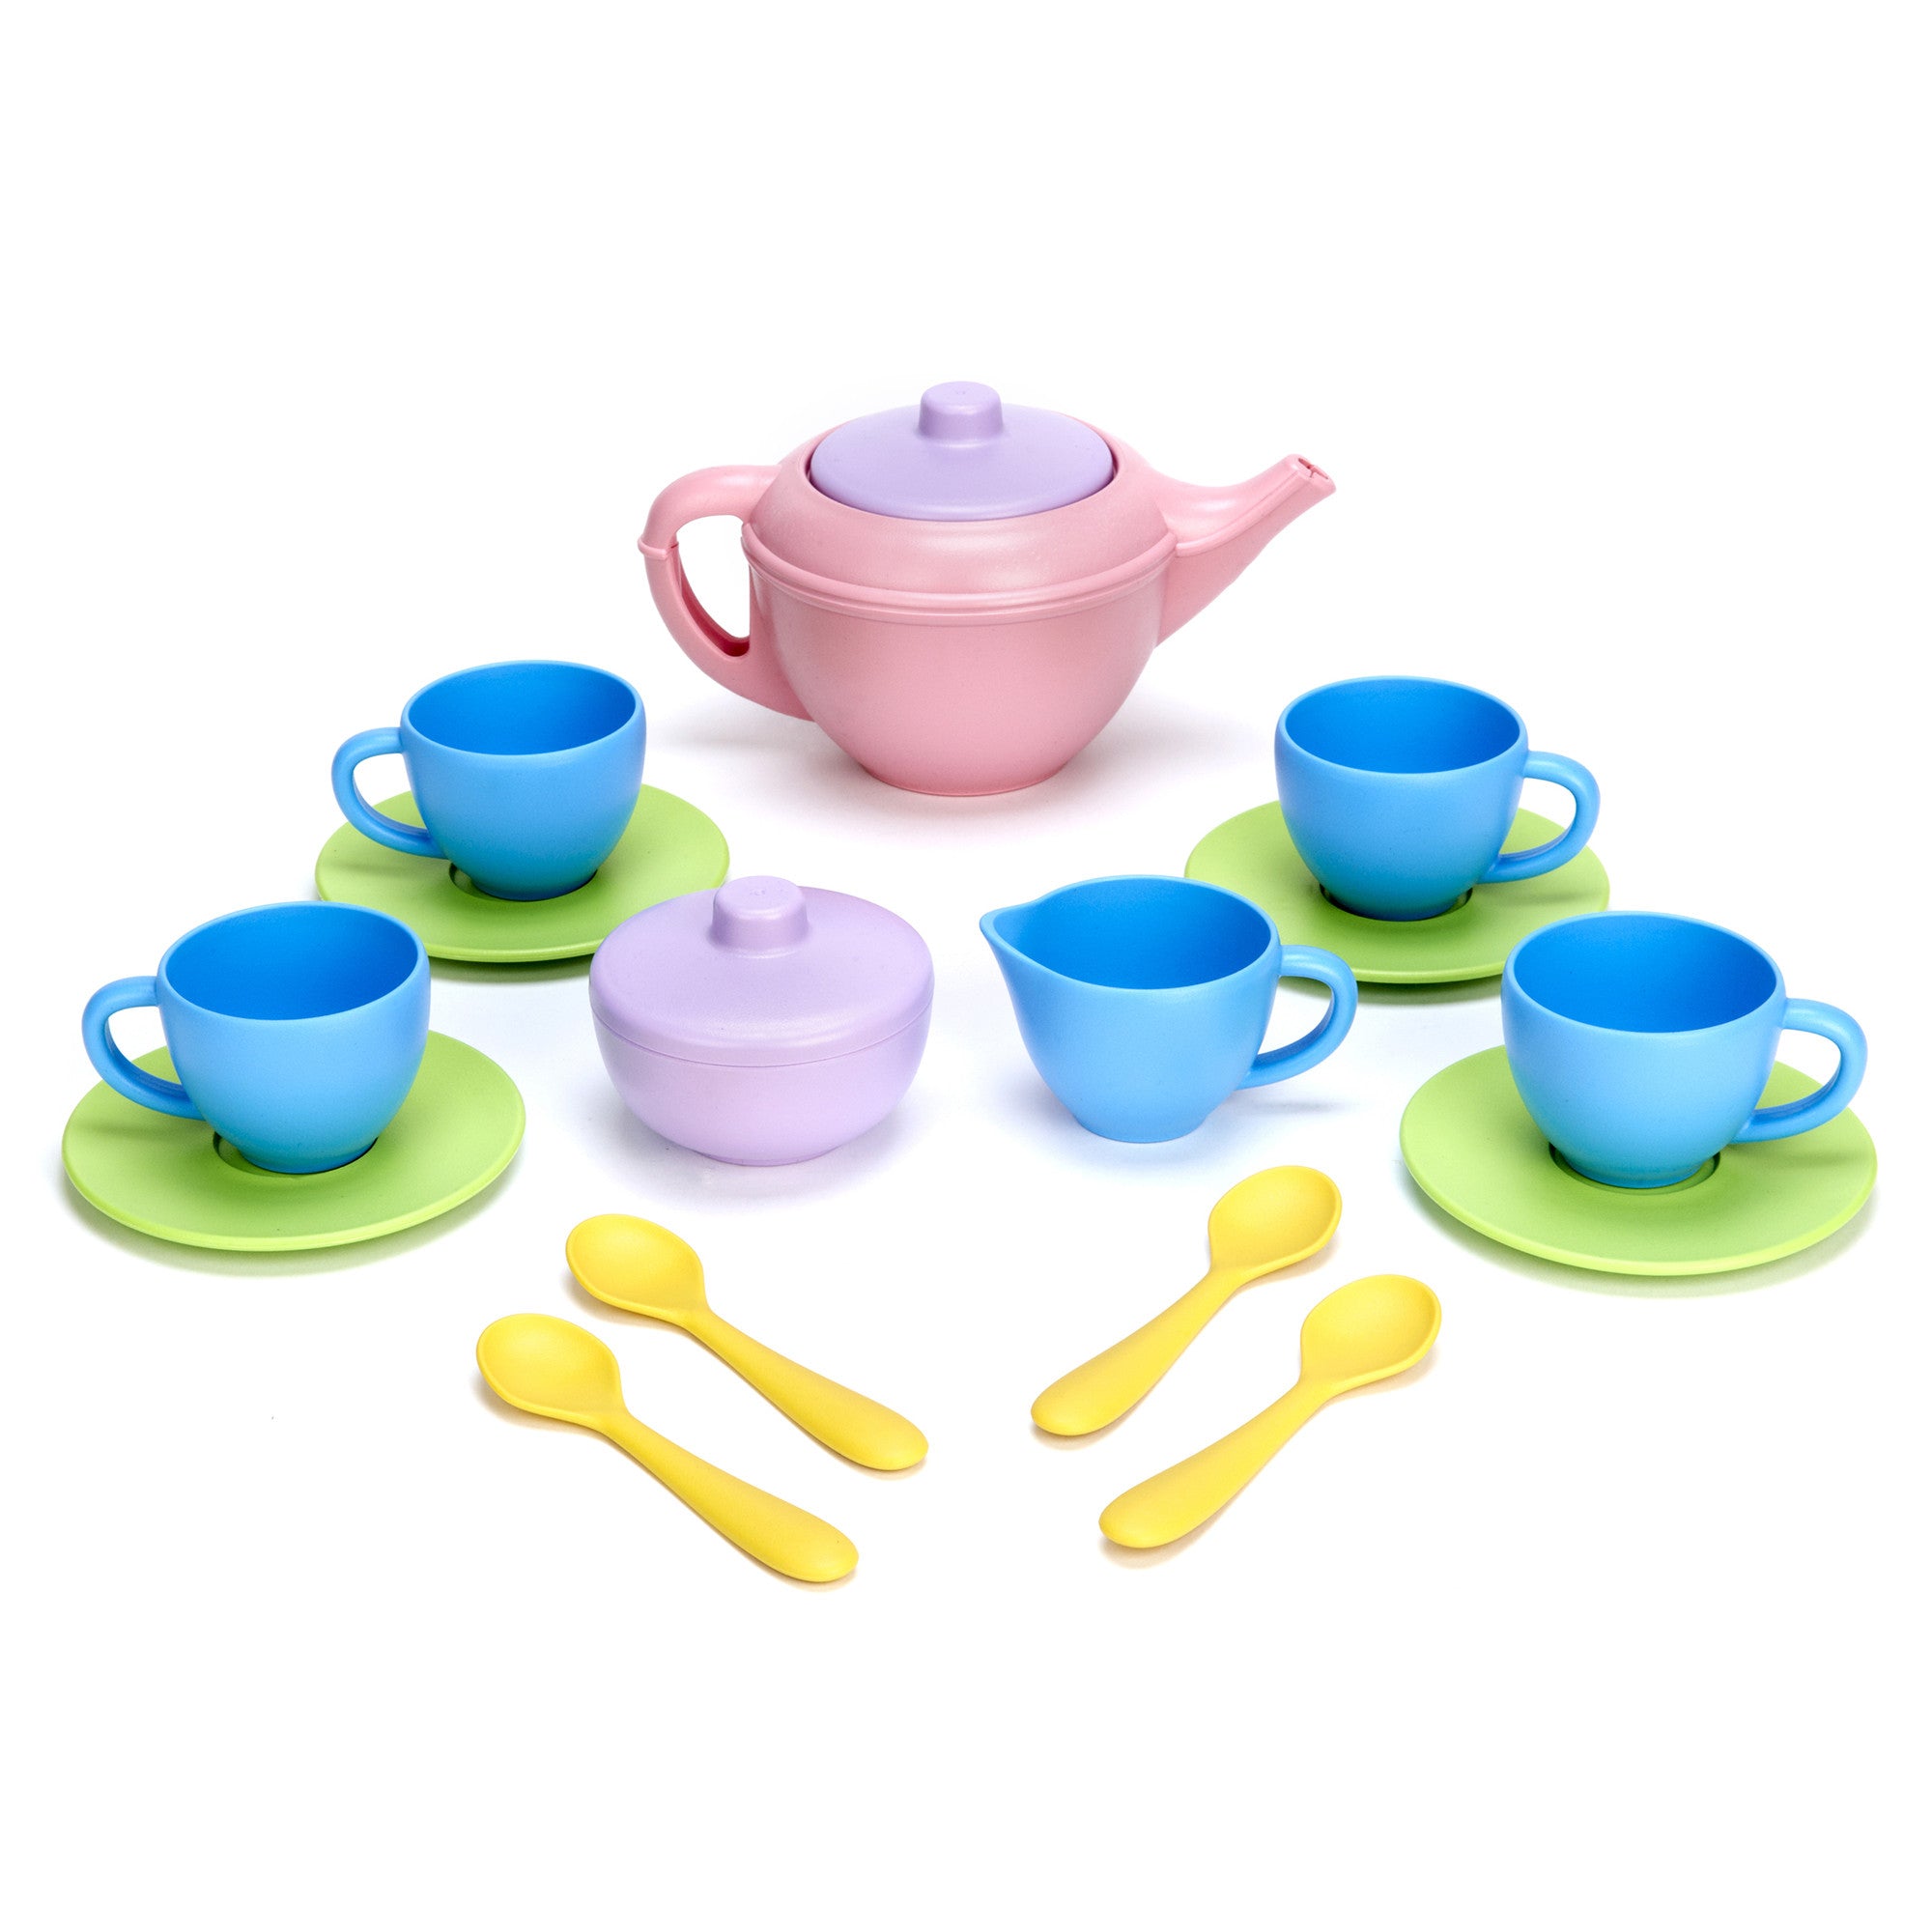 play with a tea set